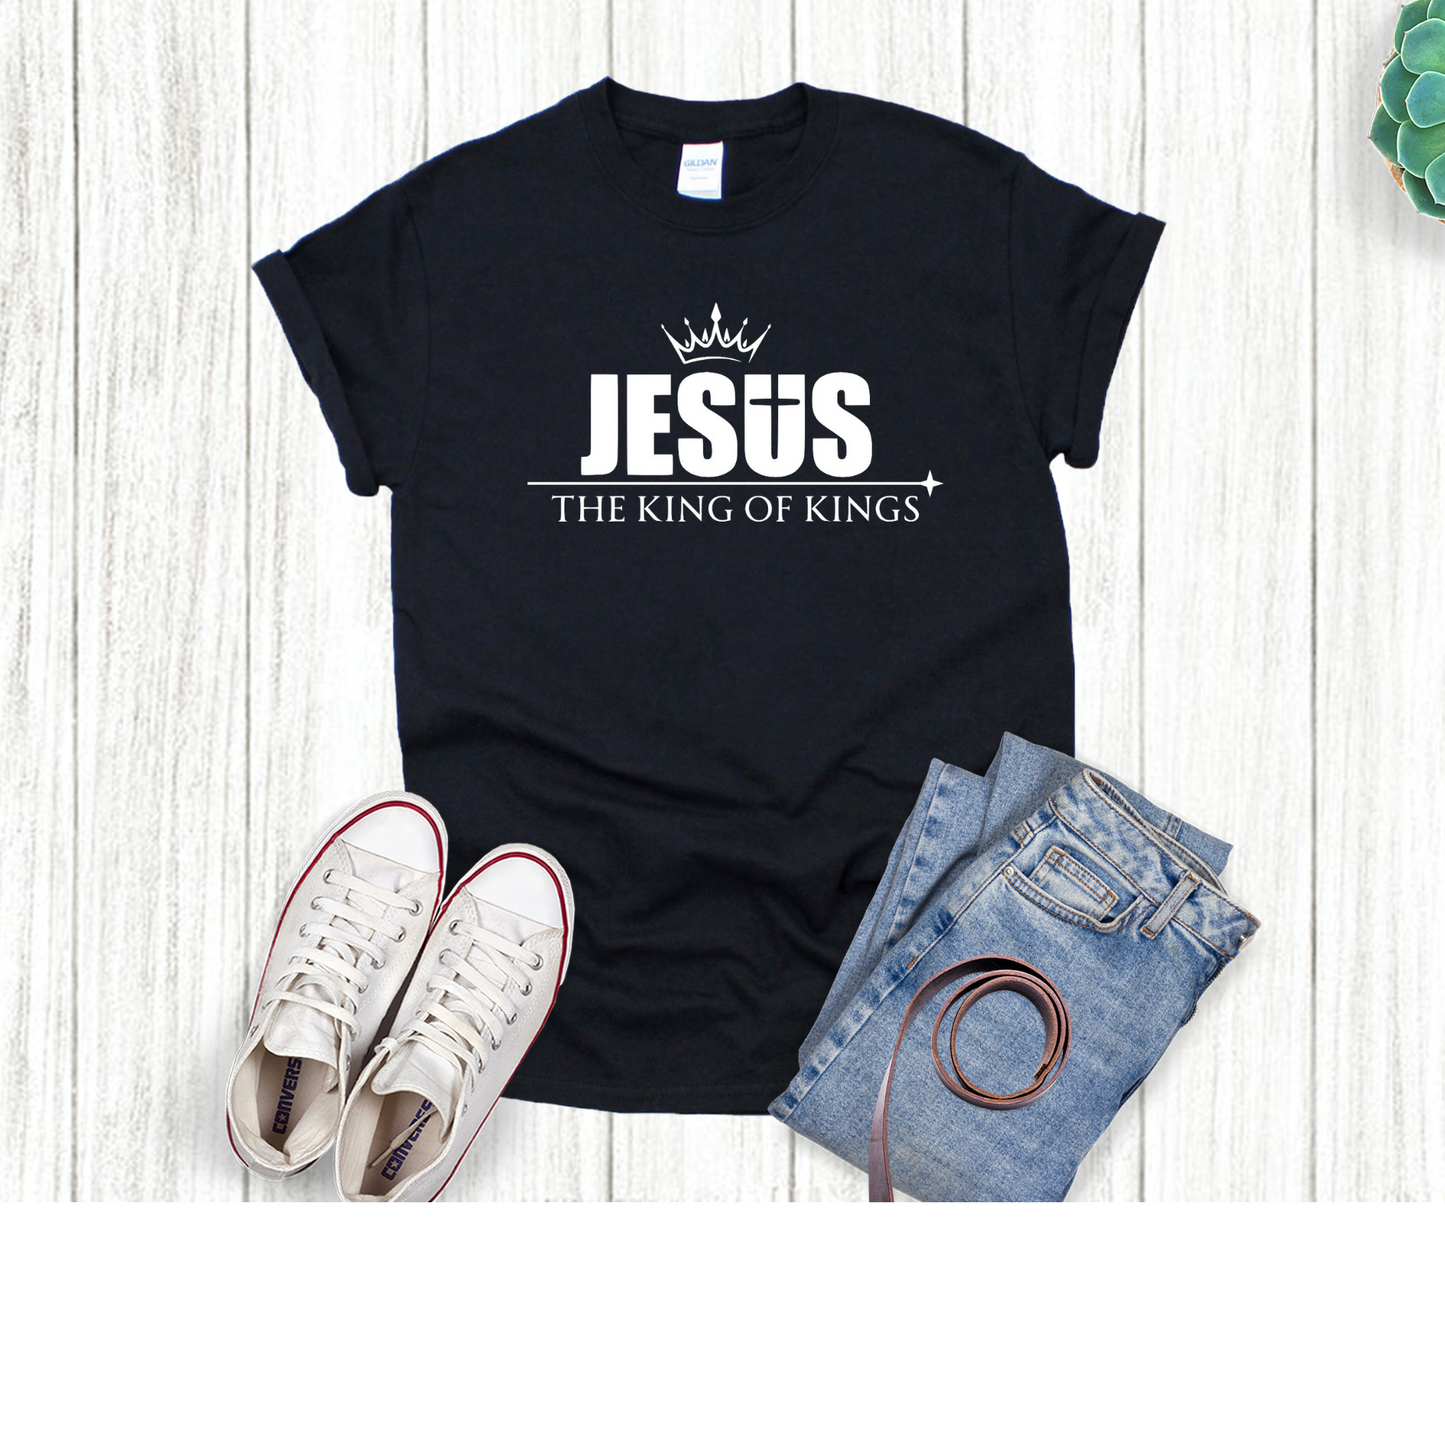 JESUS KING OF KINGS/Christian shirt/Bibble verse shirt/ Religious Shirt